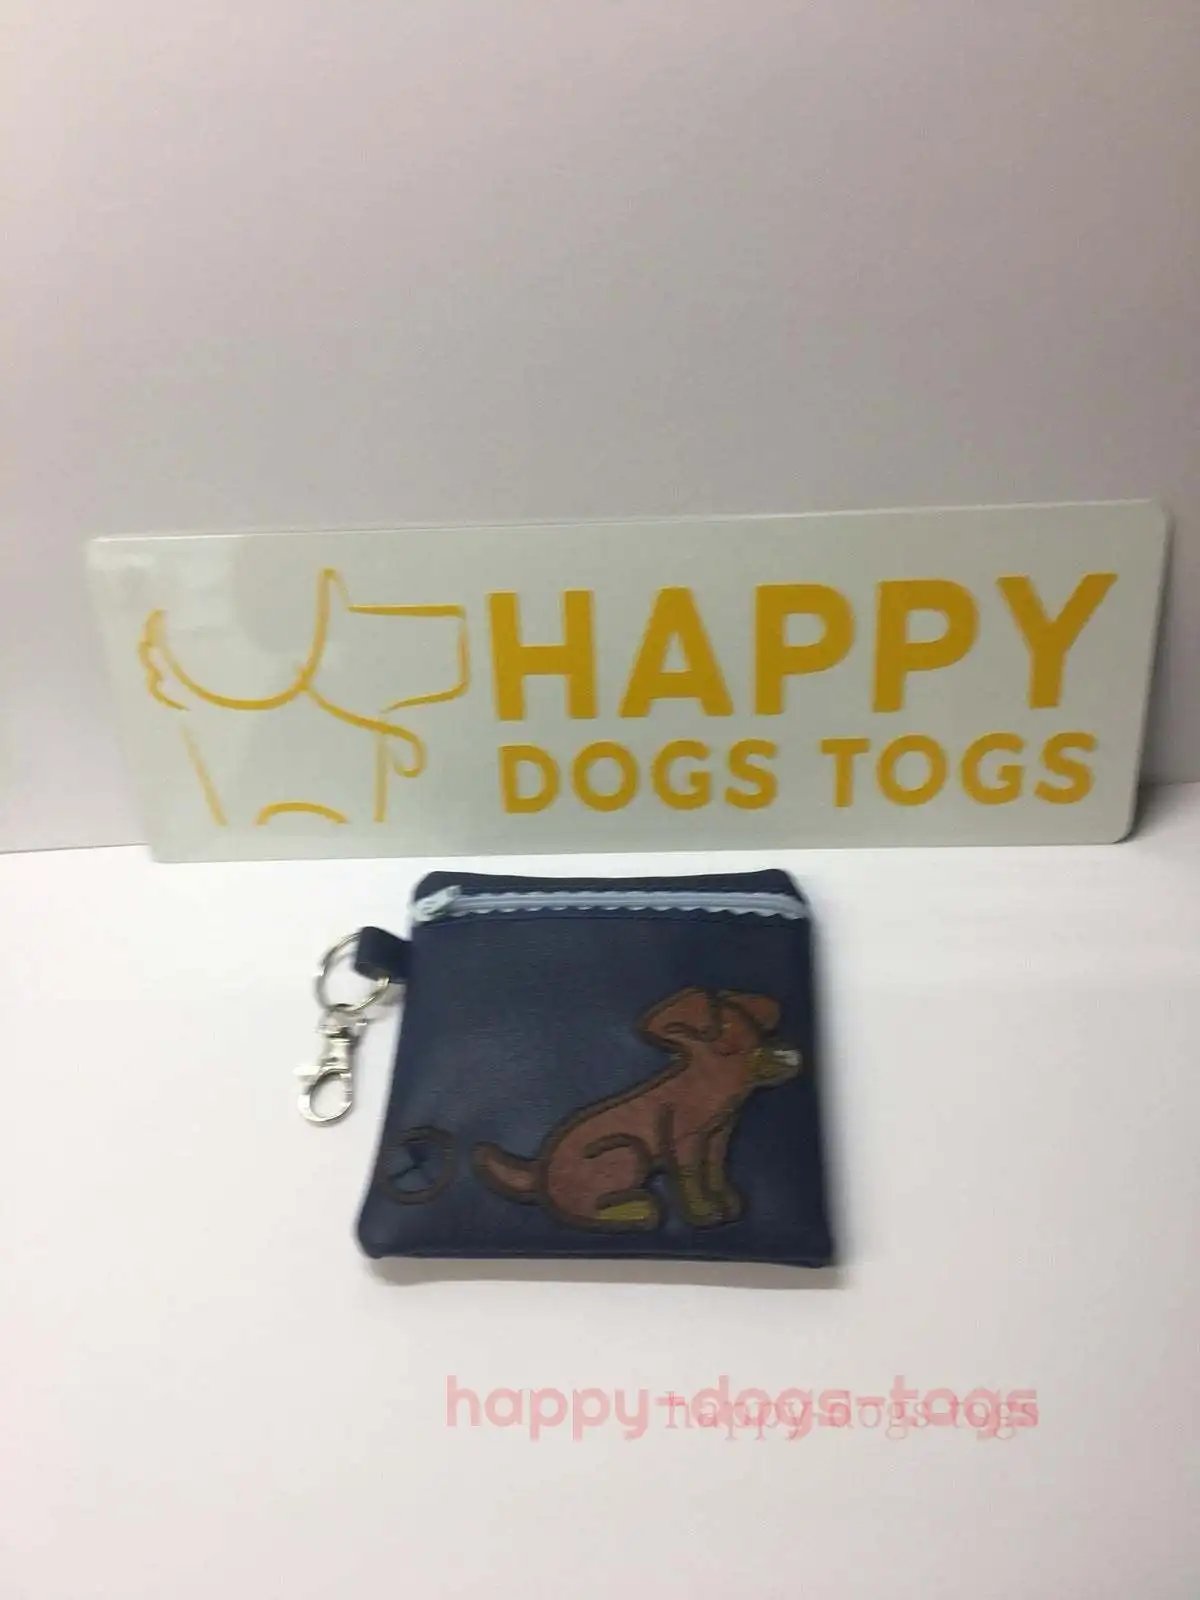 Navy Blue Dachshund  sitting embroidered Dog poo bag dispenser